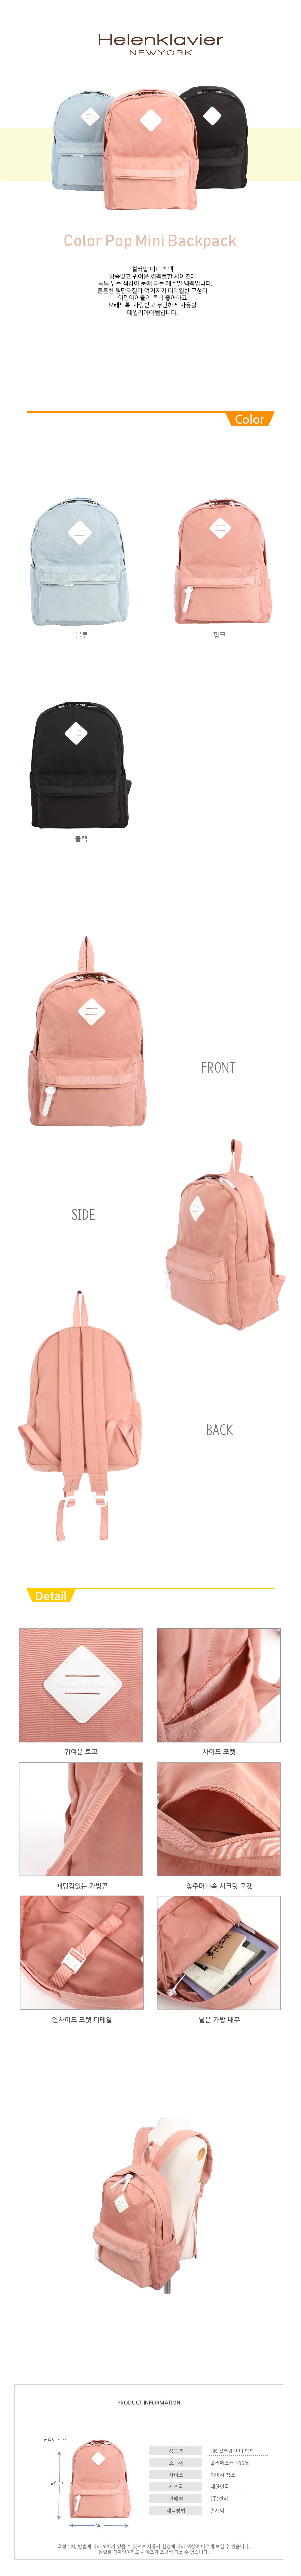 HK_color_pop_mini_backpack_165327.jpg